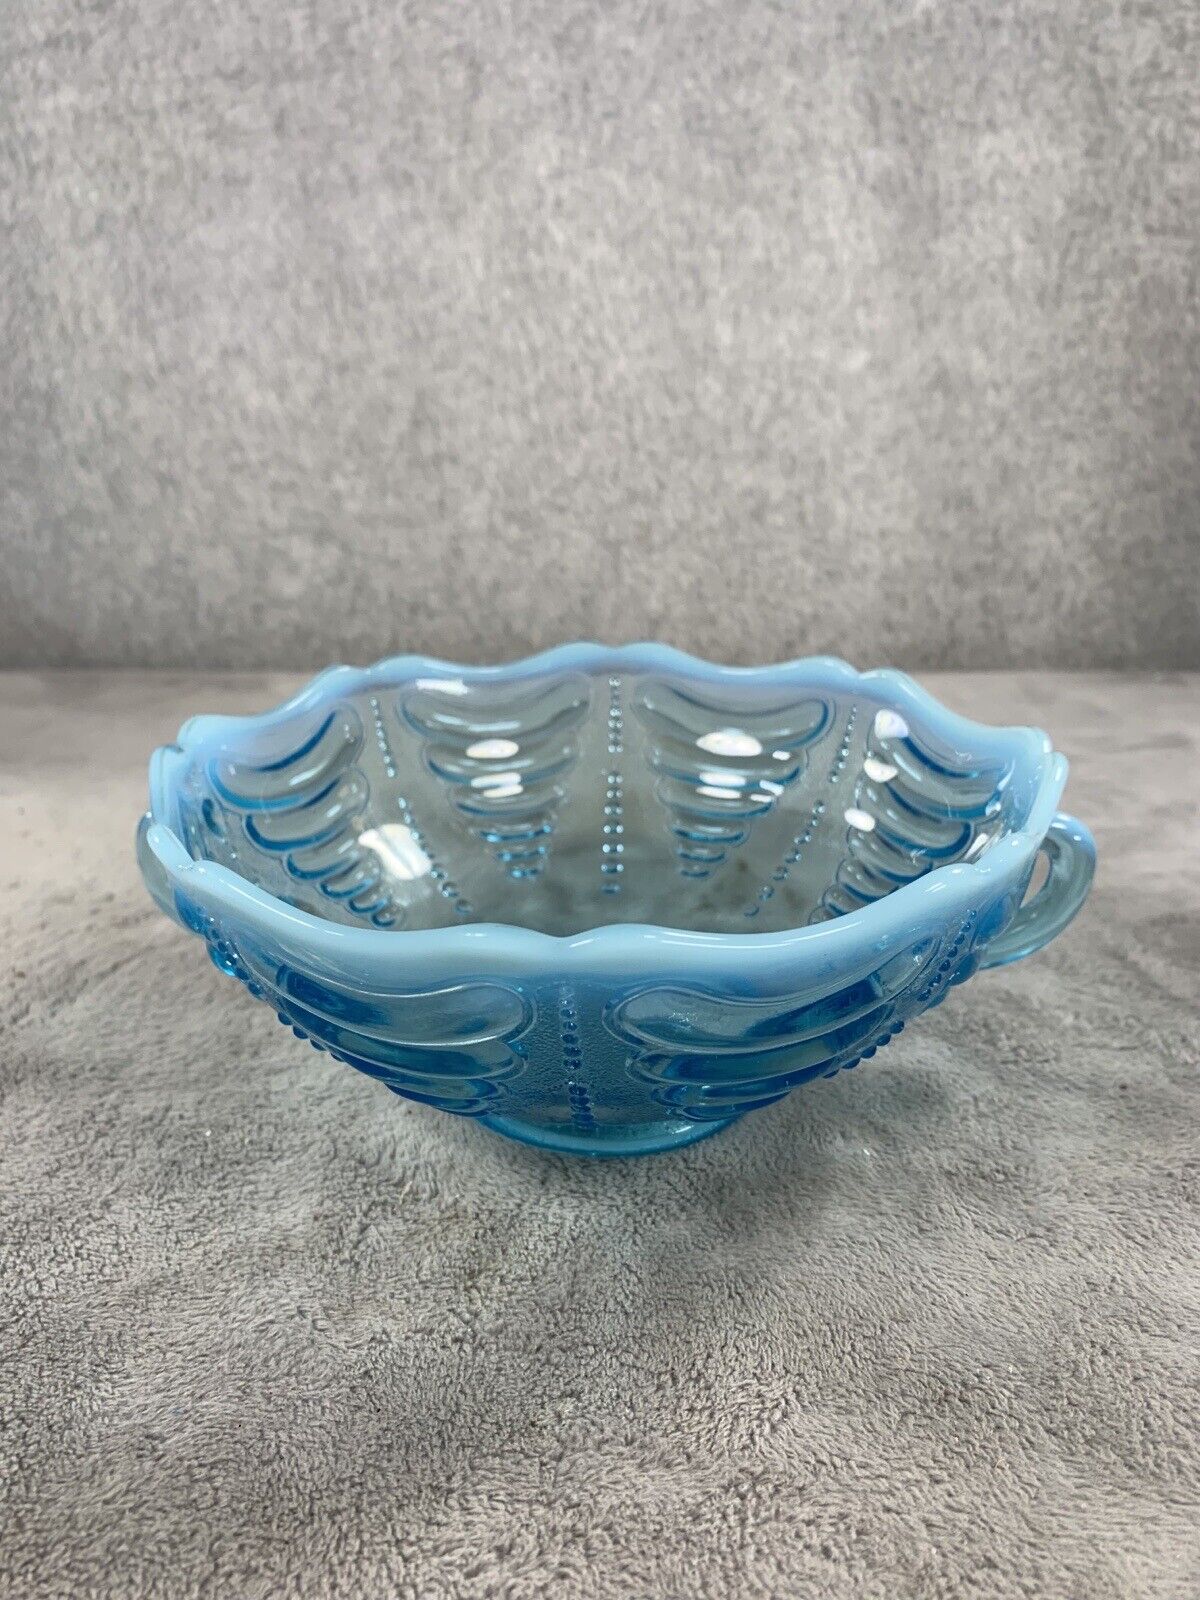 Abalone Blue Opalescent Glass Bowl Early American Pattern Jefferson